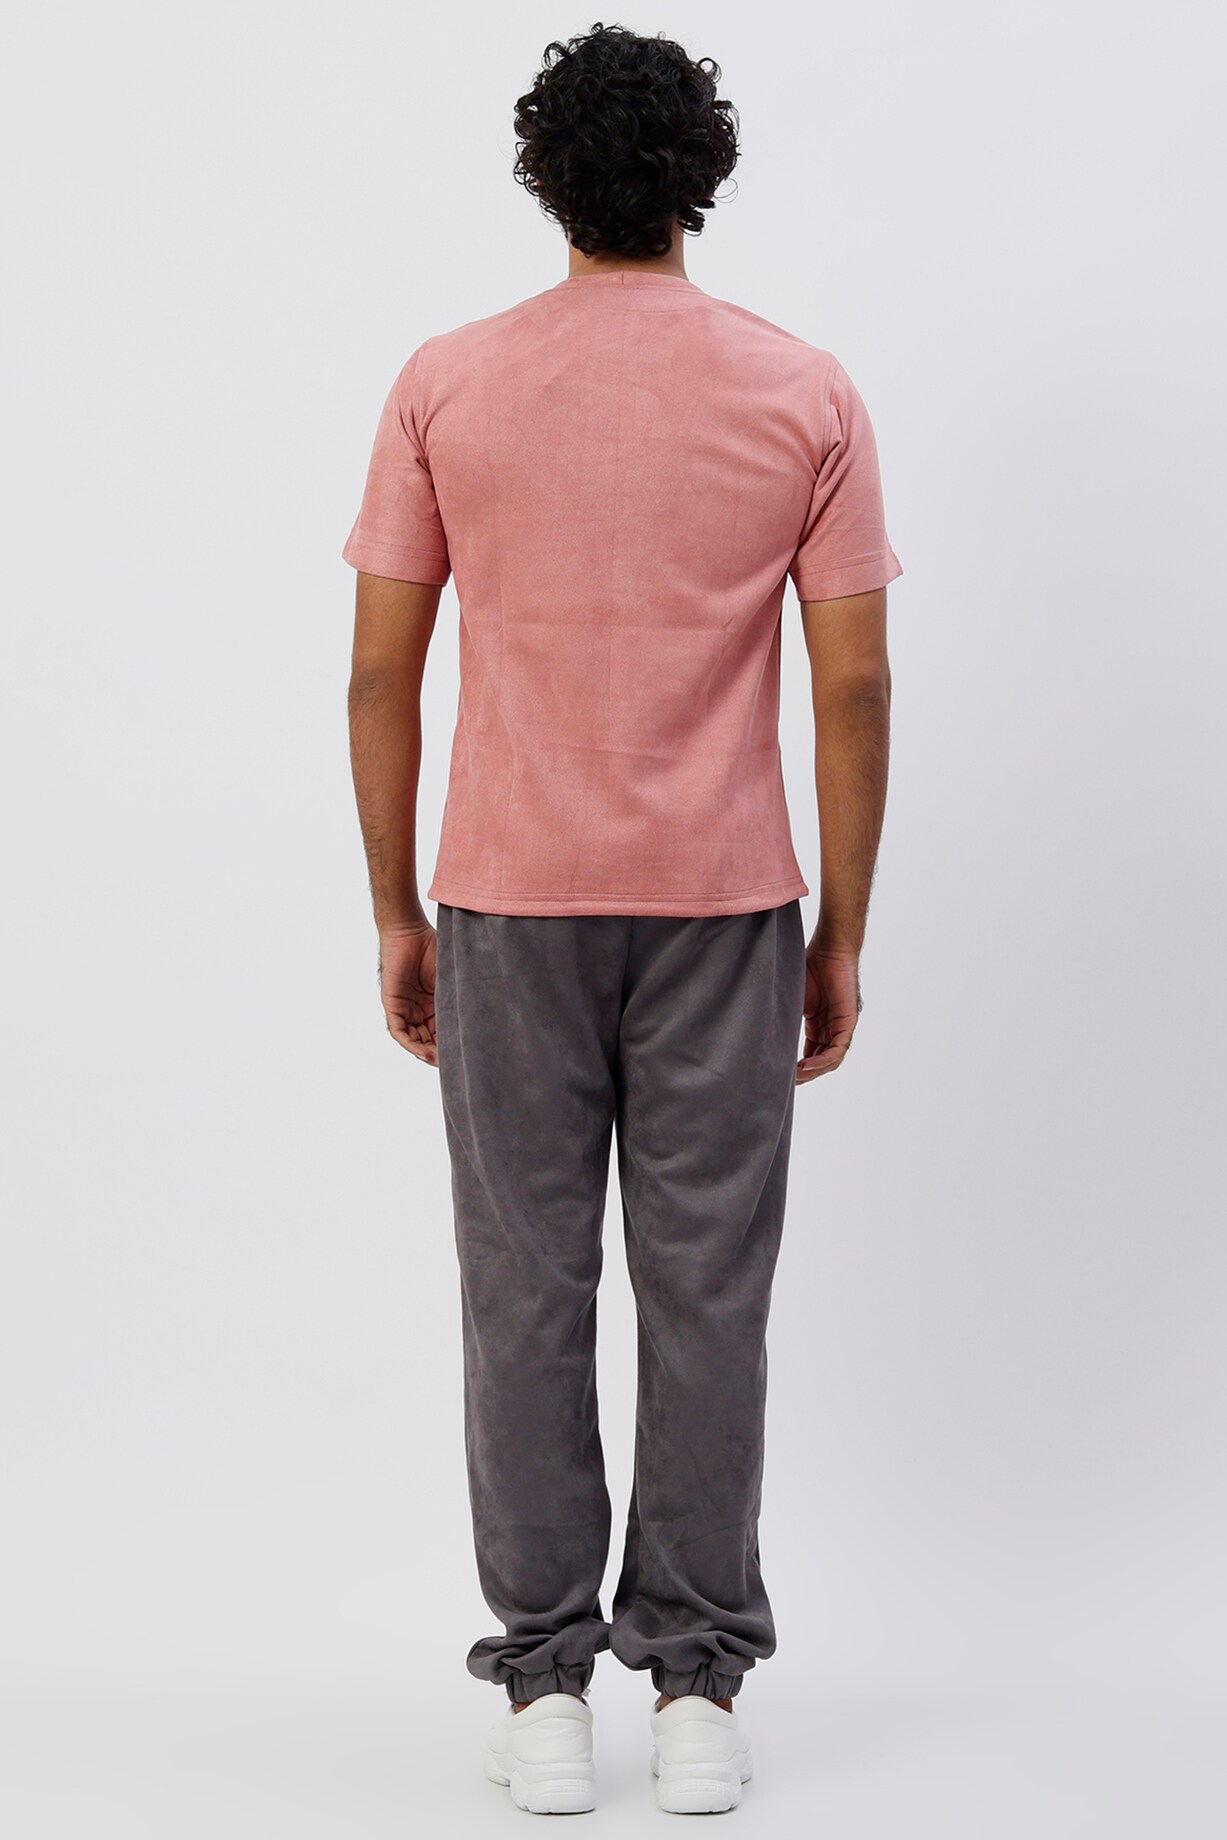 Blush Pink Suede T-Shirt by Emblaze Men